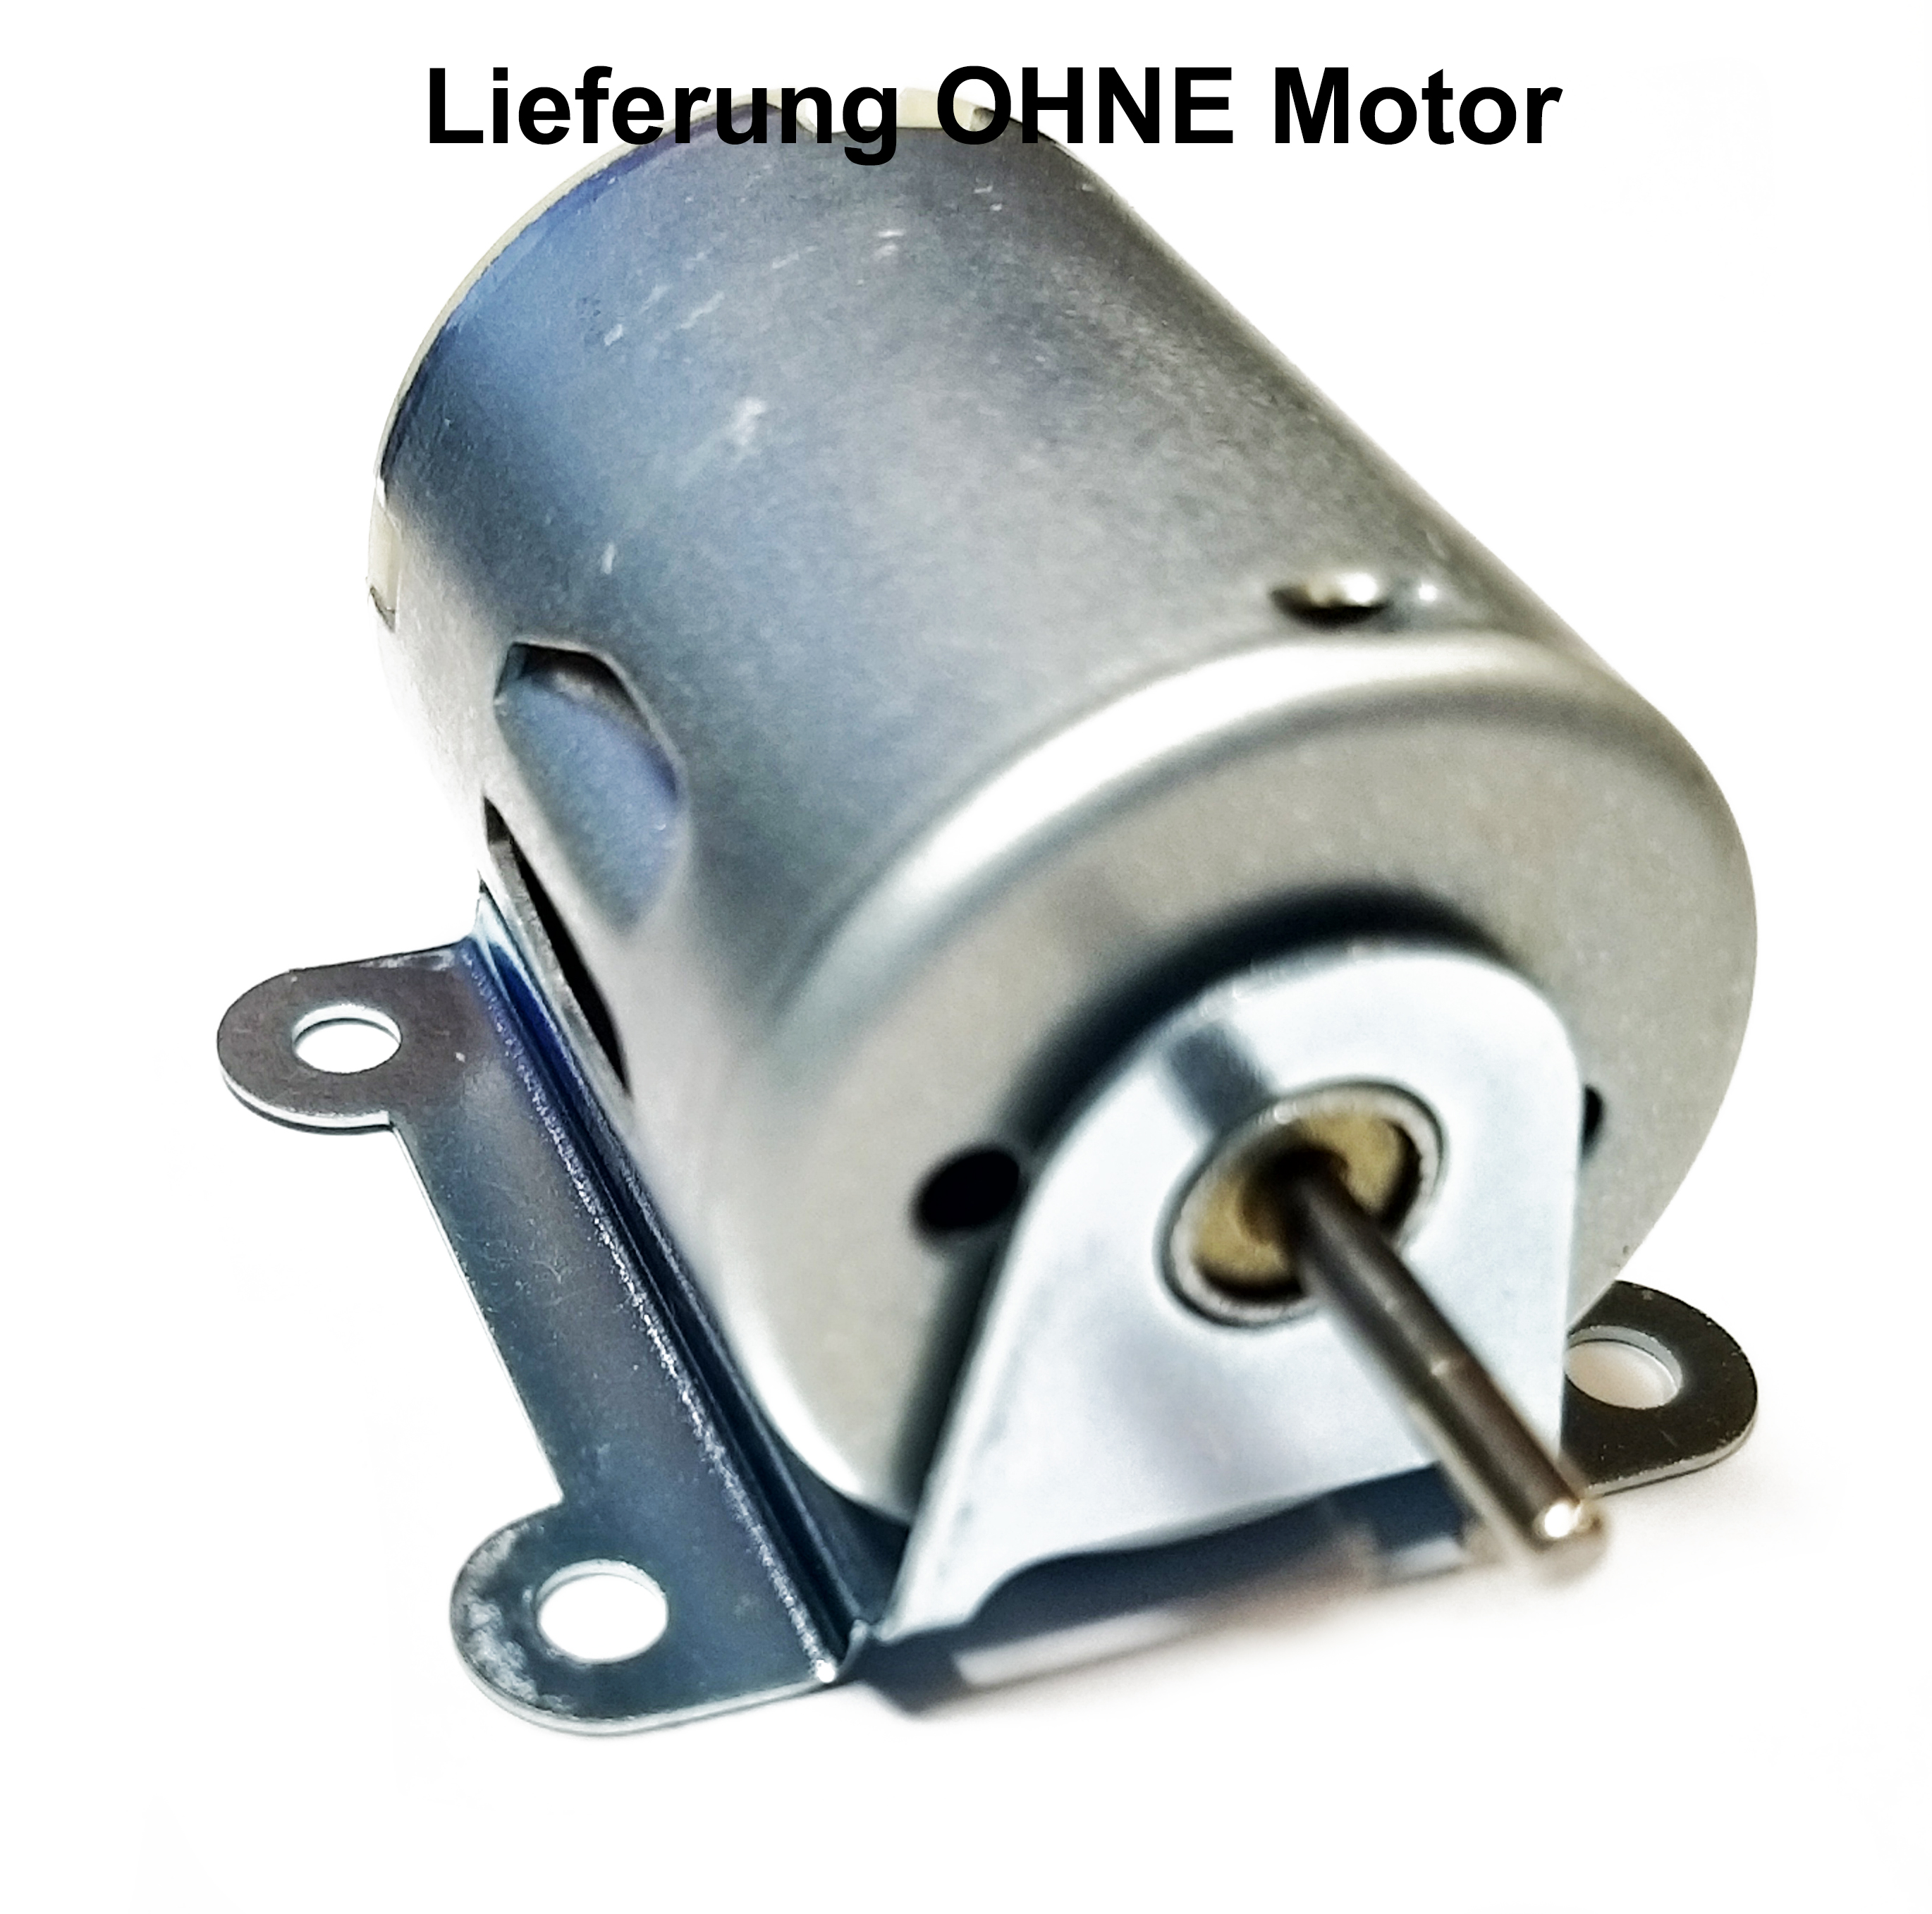 https://www.luedeke-elektronic.de/images/product_images/original_images/791h-halterung-mit-motor-1.jpg